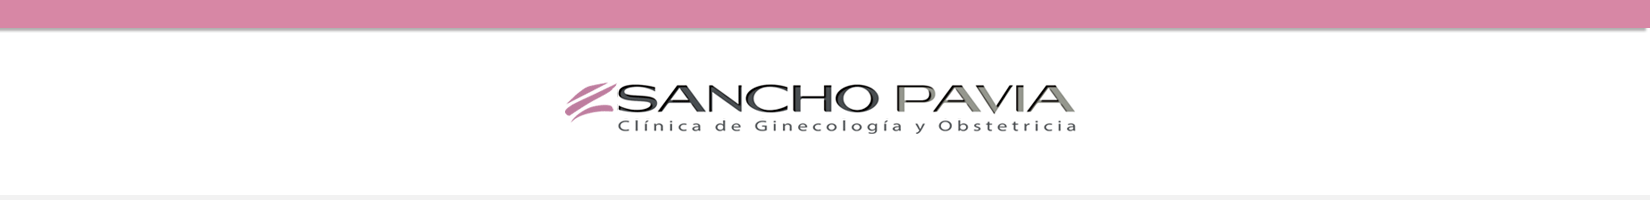 Clinica Sancho Pavía. Ginecología y Obstetricia